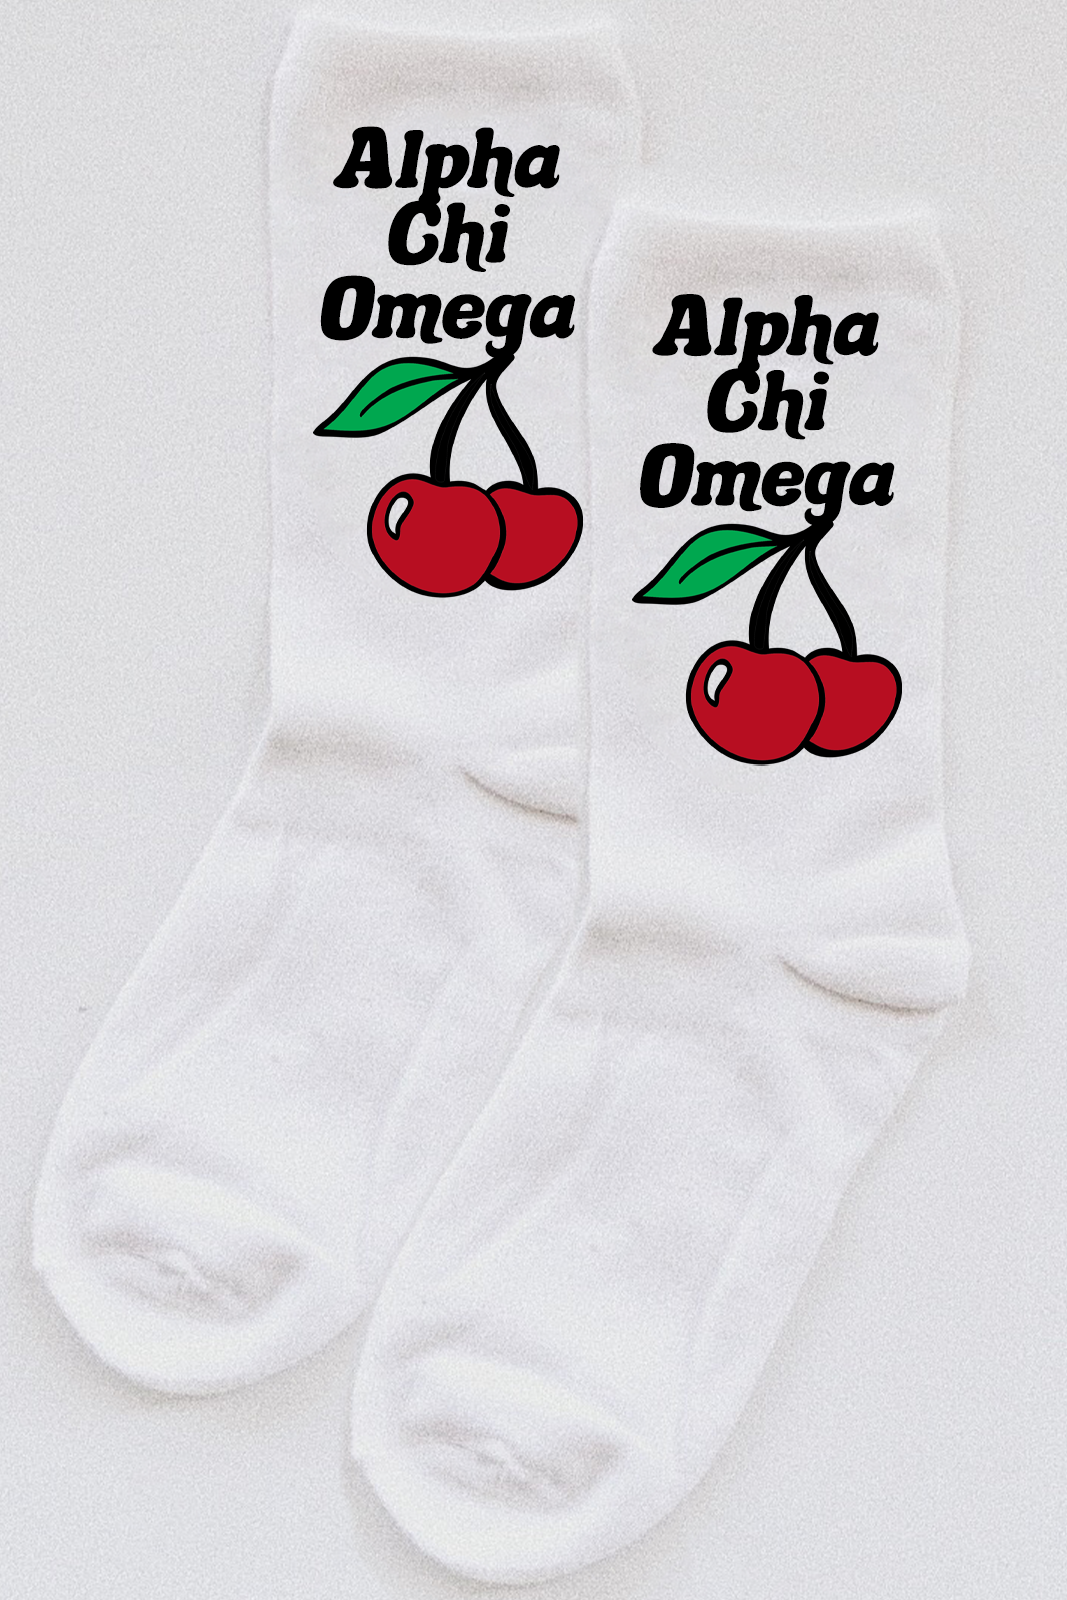 Alpha Chi Omega Cherry socks - Spikes and Seams Greek